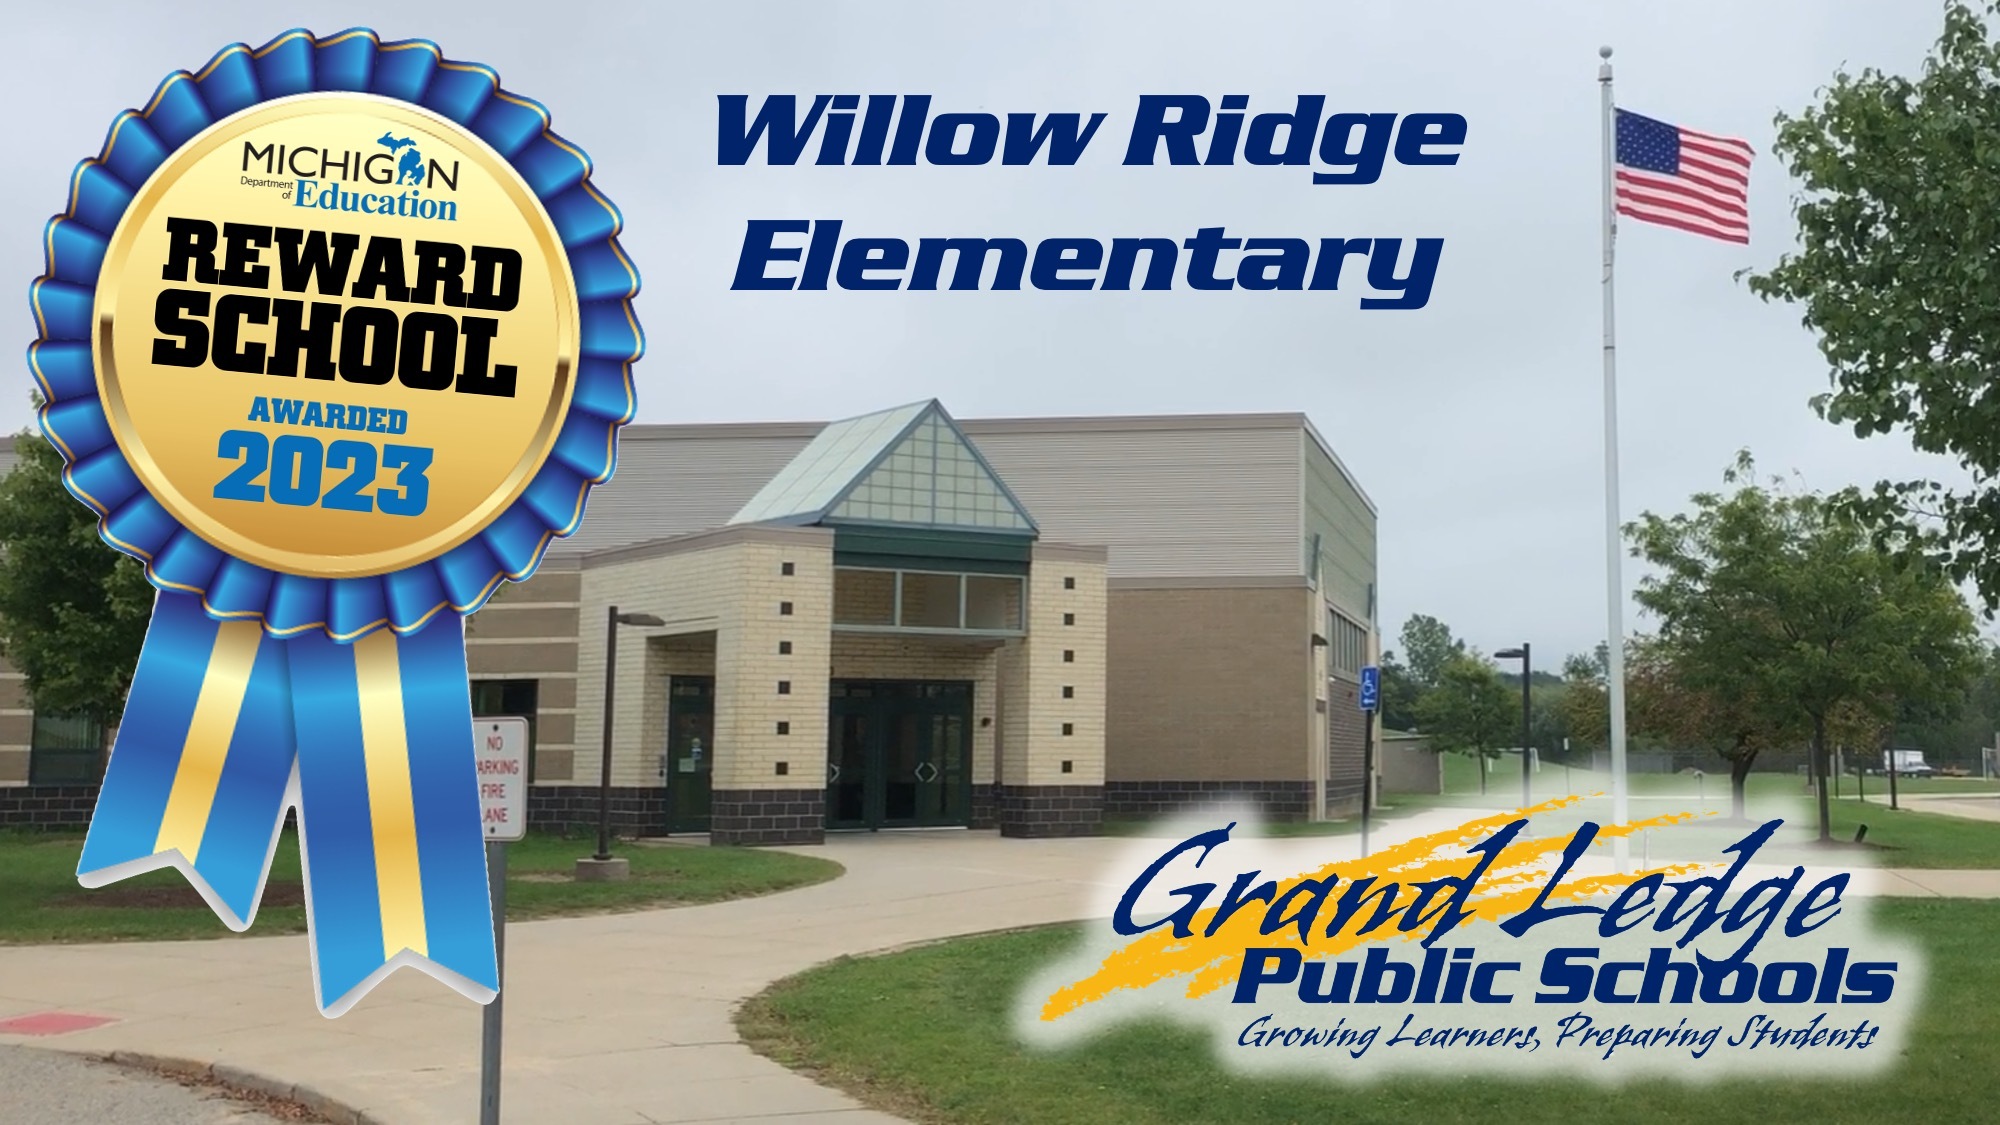 Willow Ridge Elementary is a Reward School